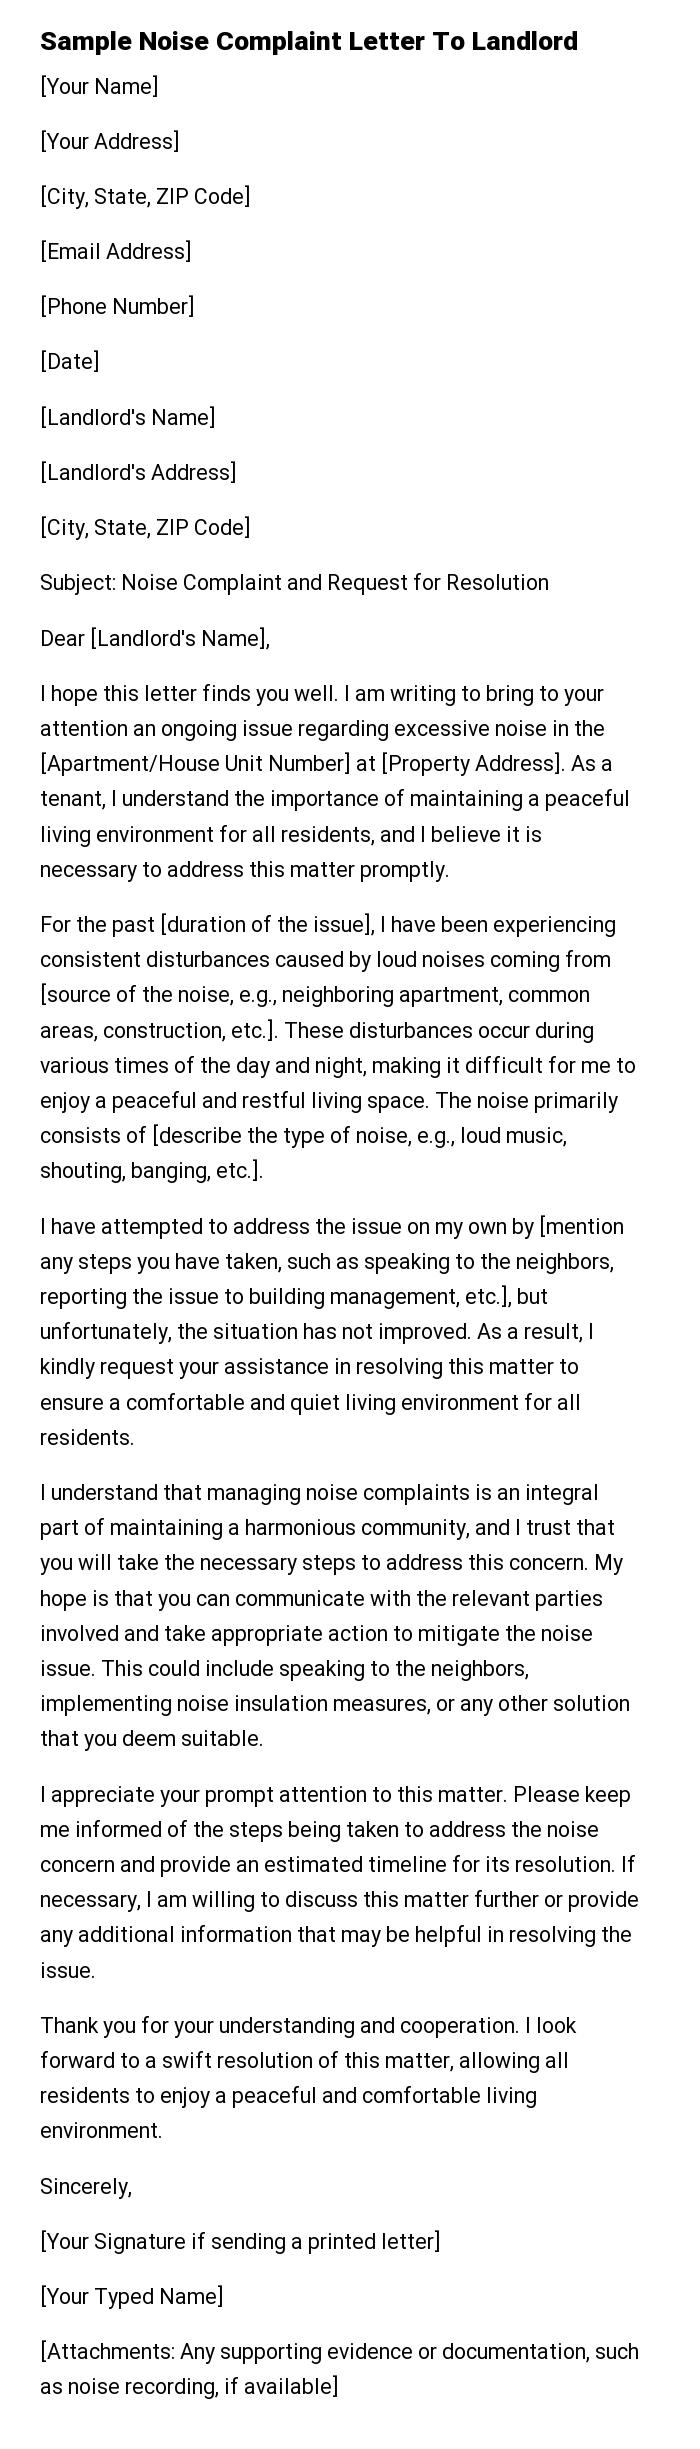 Sample Noise Complaint Letter To Landlord